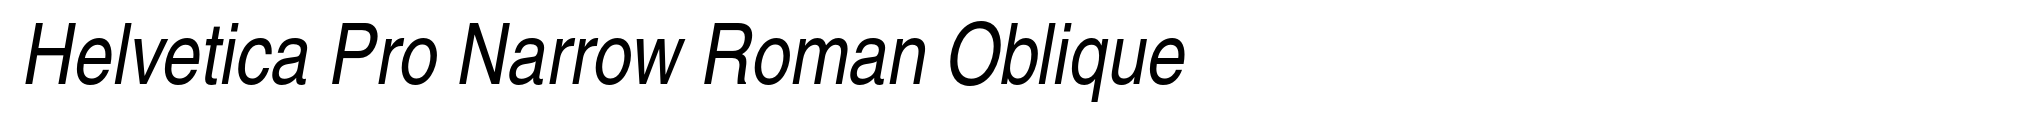 Helvetica Pro Narrow Roman Oblique image